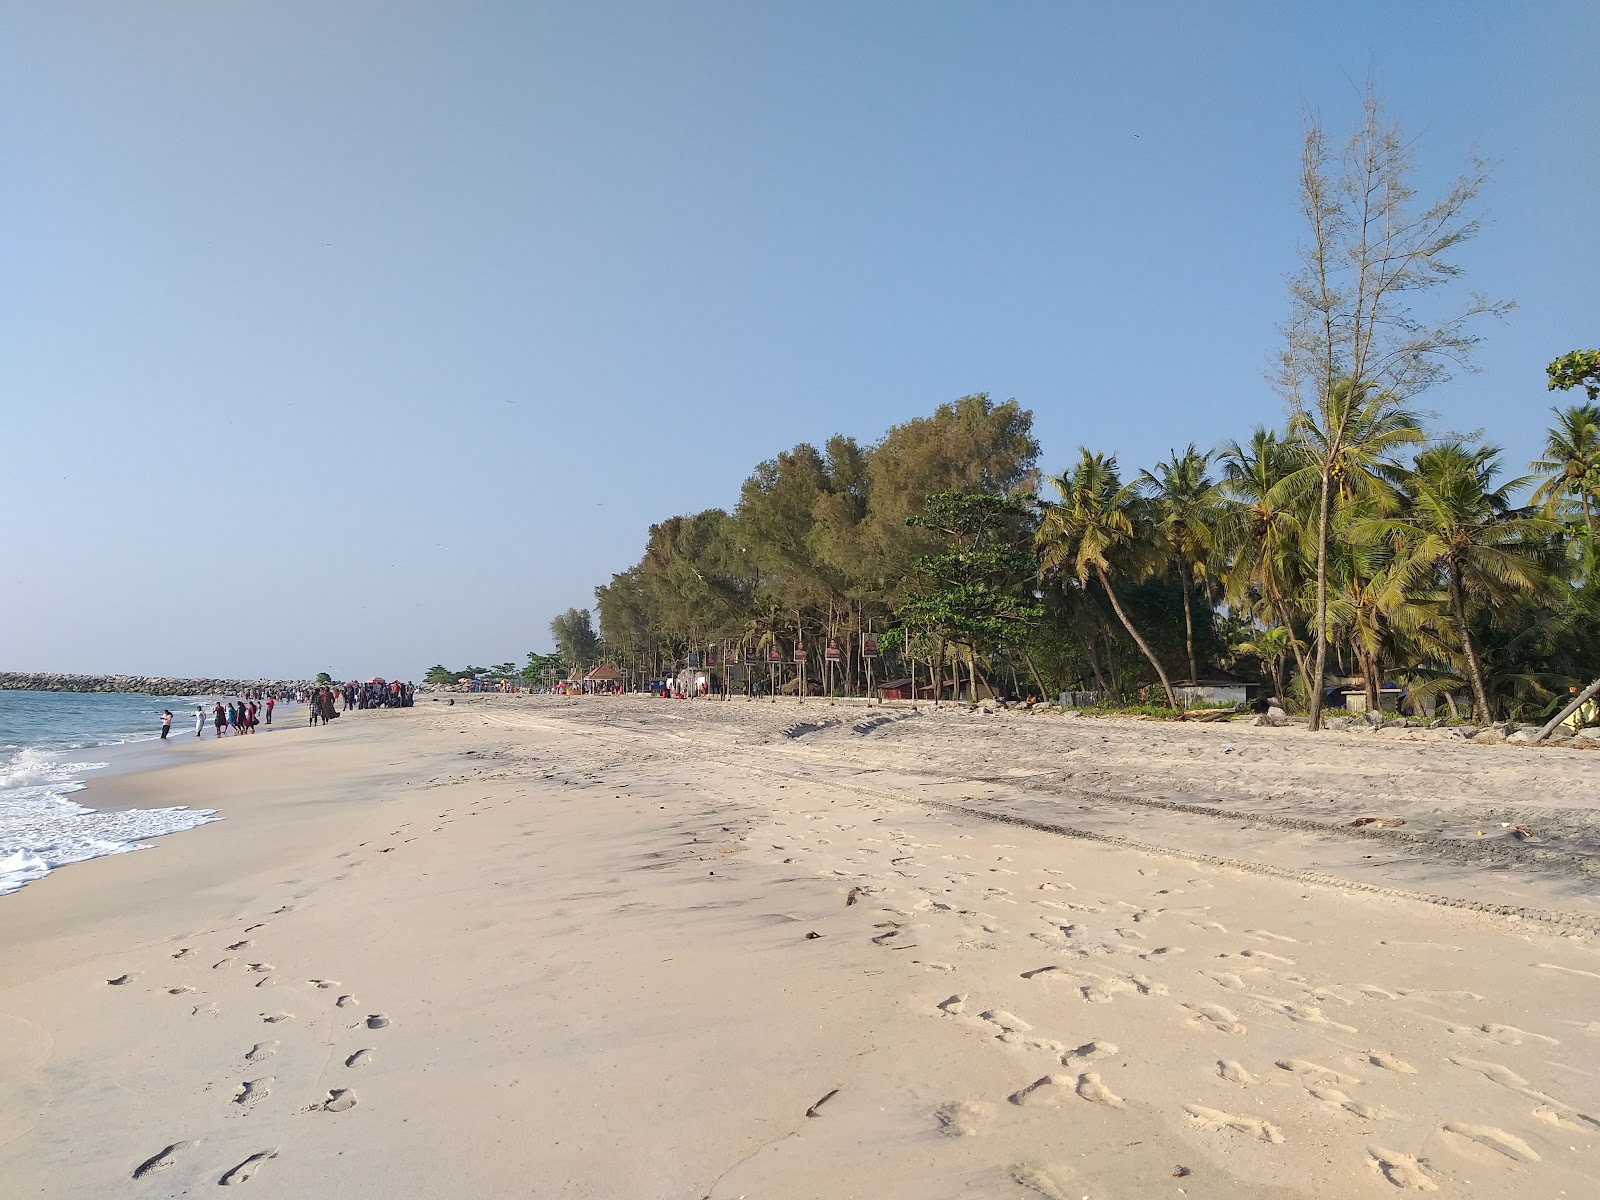 Azheekal Beach'in fotoğrafı geniş plaj ile birlikte